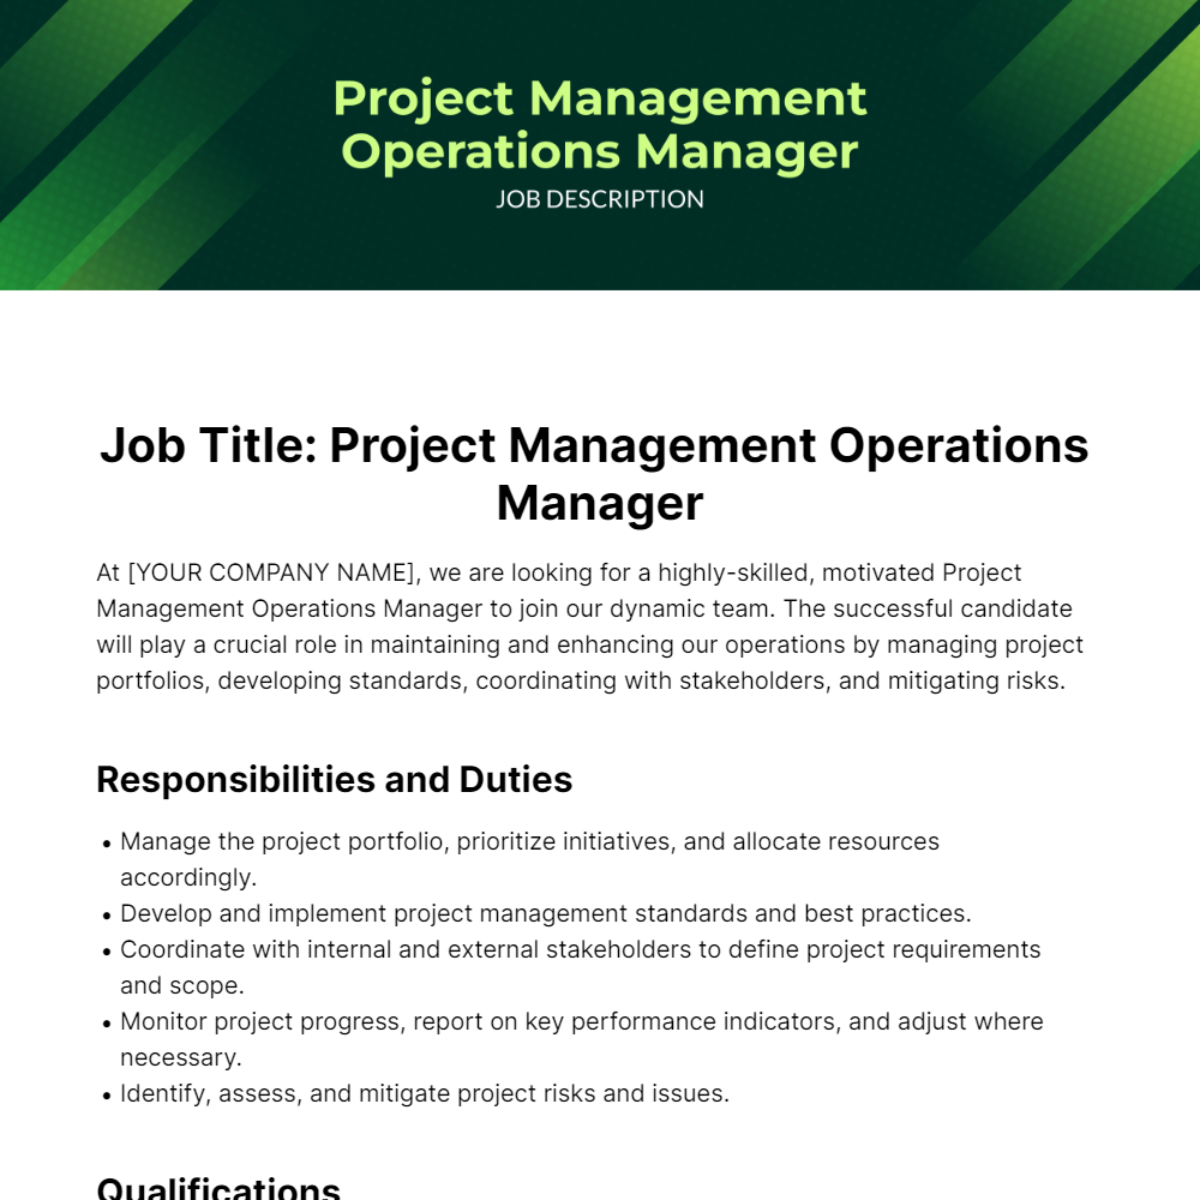 Project Management Operations Manager Job Description Template